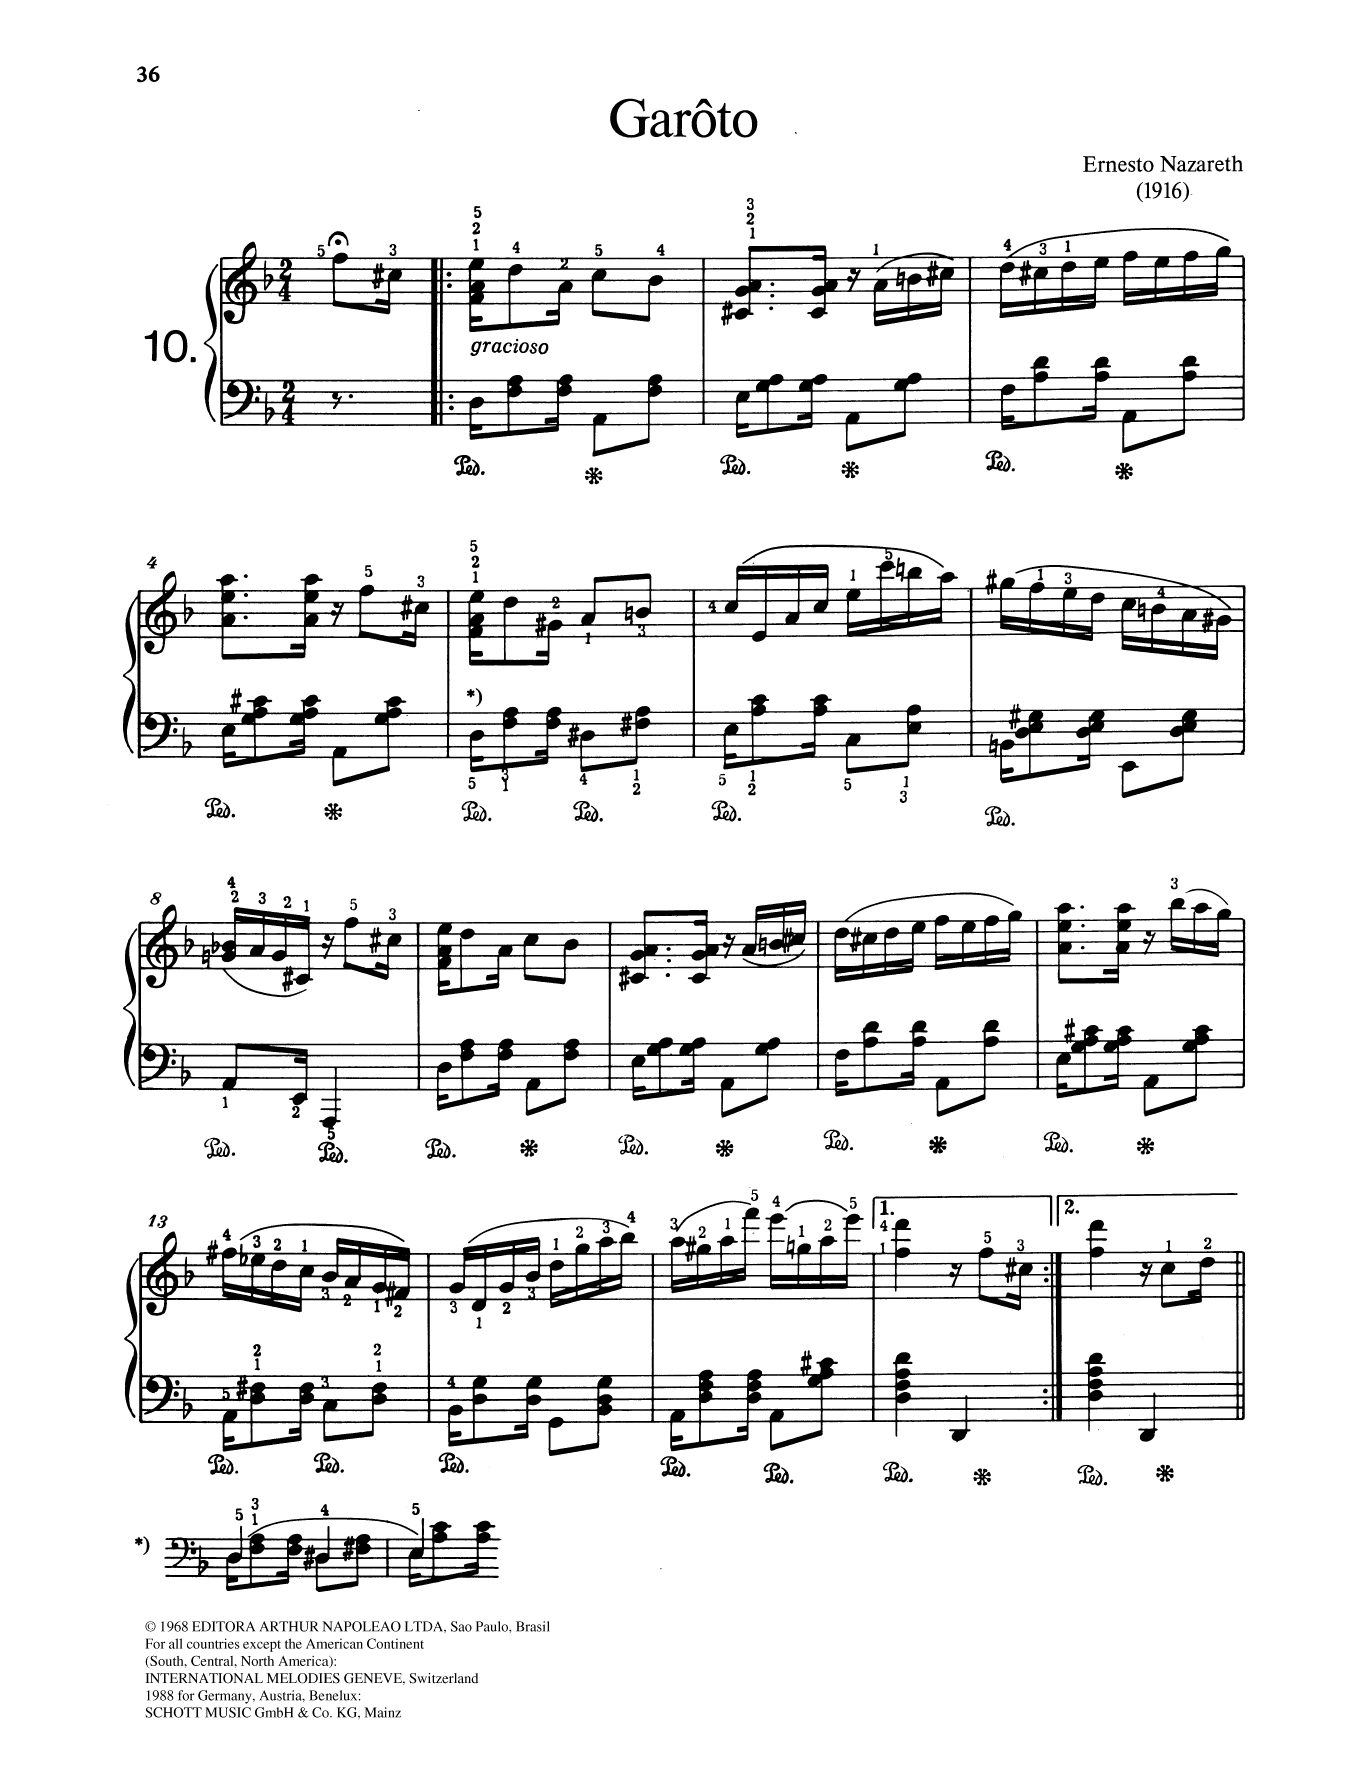 Ernesto Nazareth Garôto Sheet Music Notes & Chords for Piano Solo - Download or Print PDF